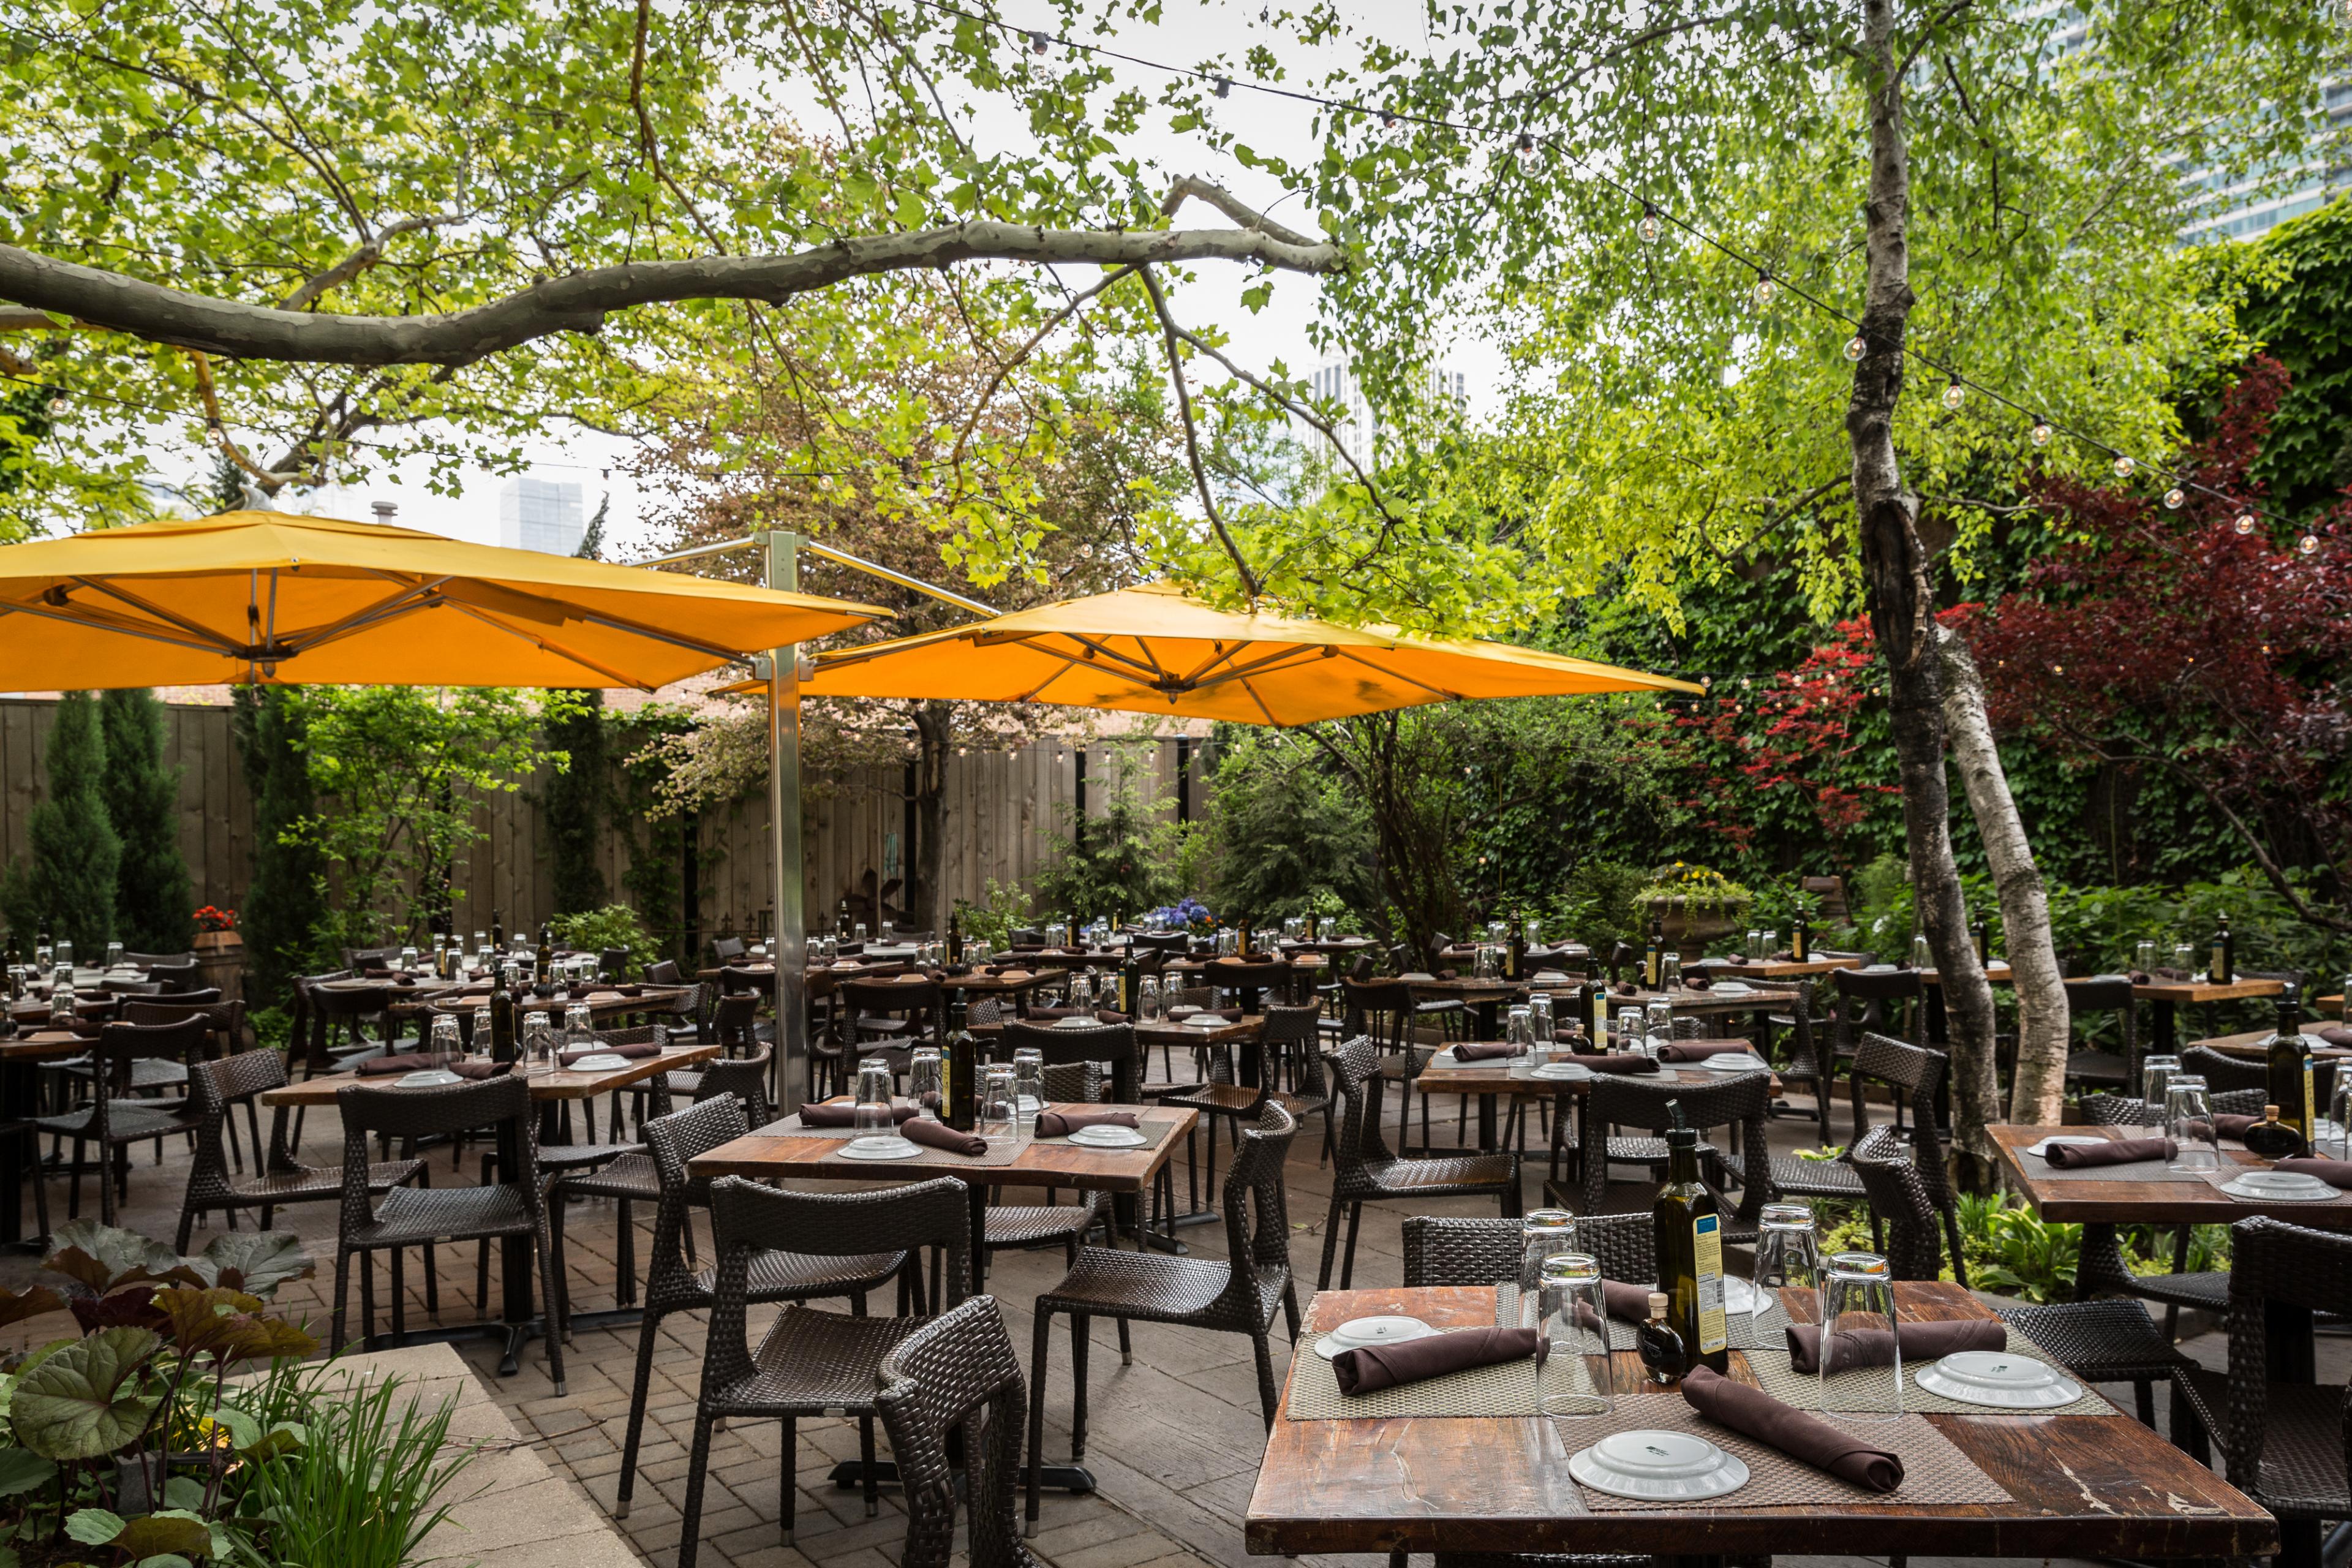 patio of restaurant with yellow umbrellas and garden